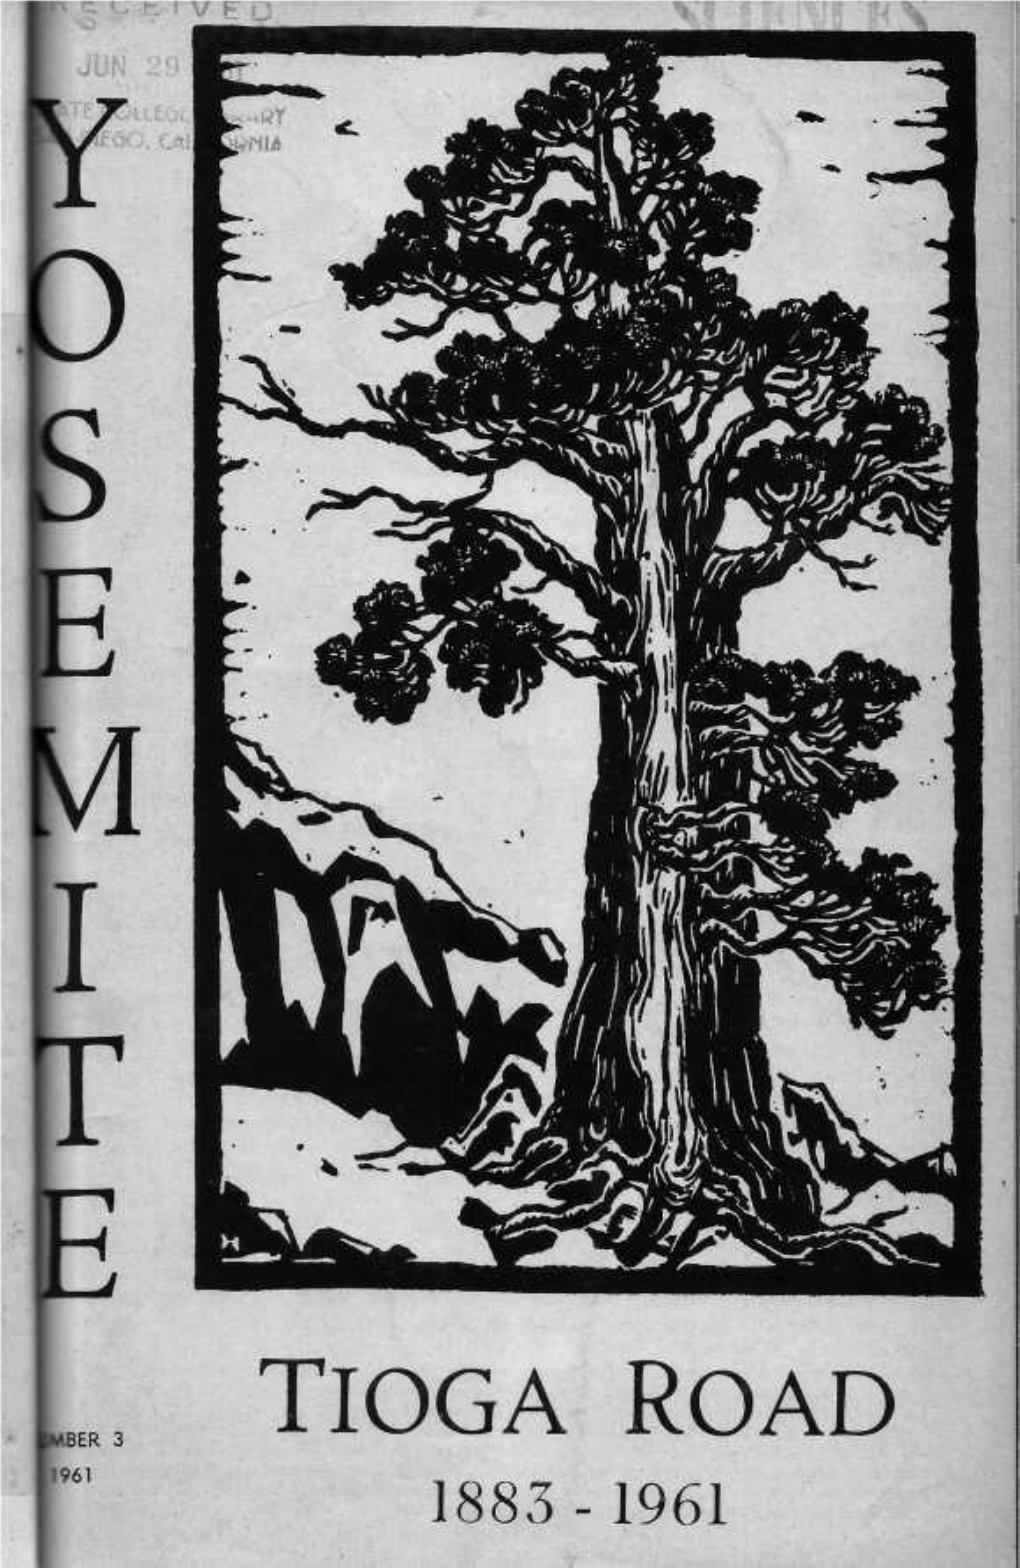 TIOGA ROAD 1961 ]883-19(1 Cover : Storm Juniper from Tresidder and Hoss the Trees of Yosemilr